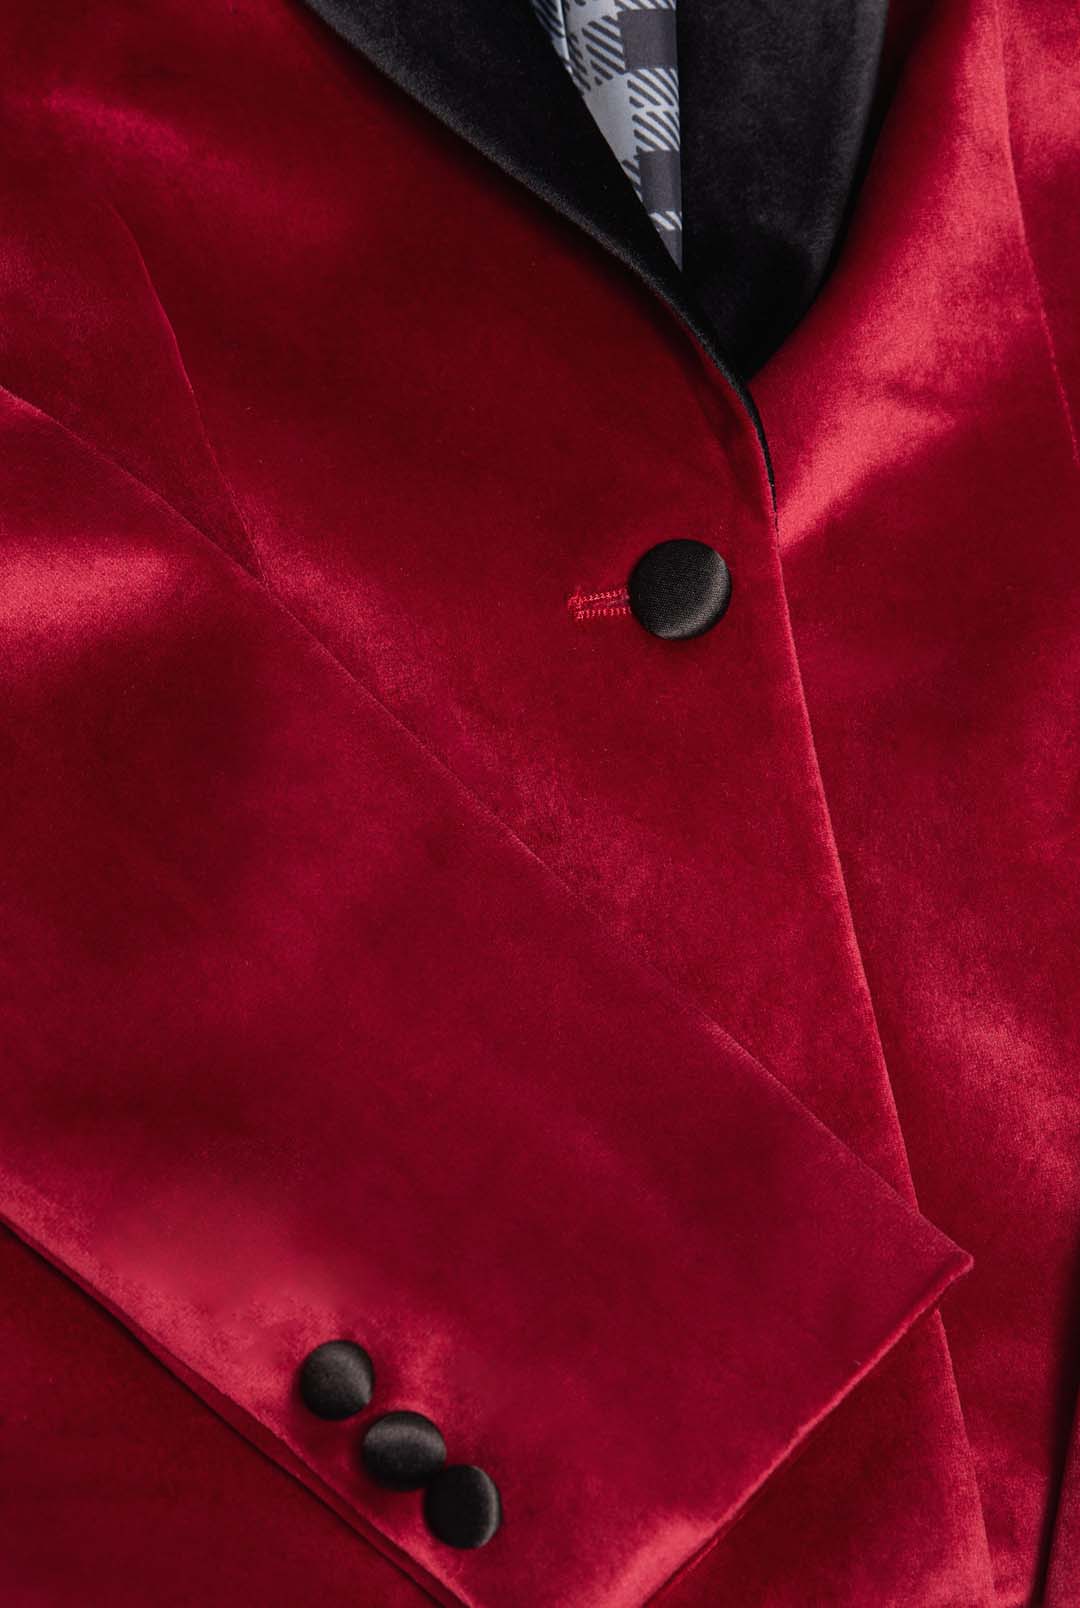 Women's Red Suits & Suit Separates